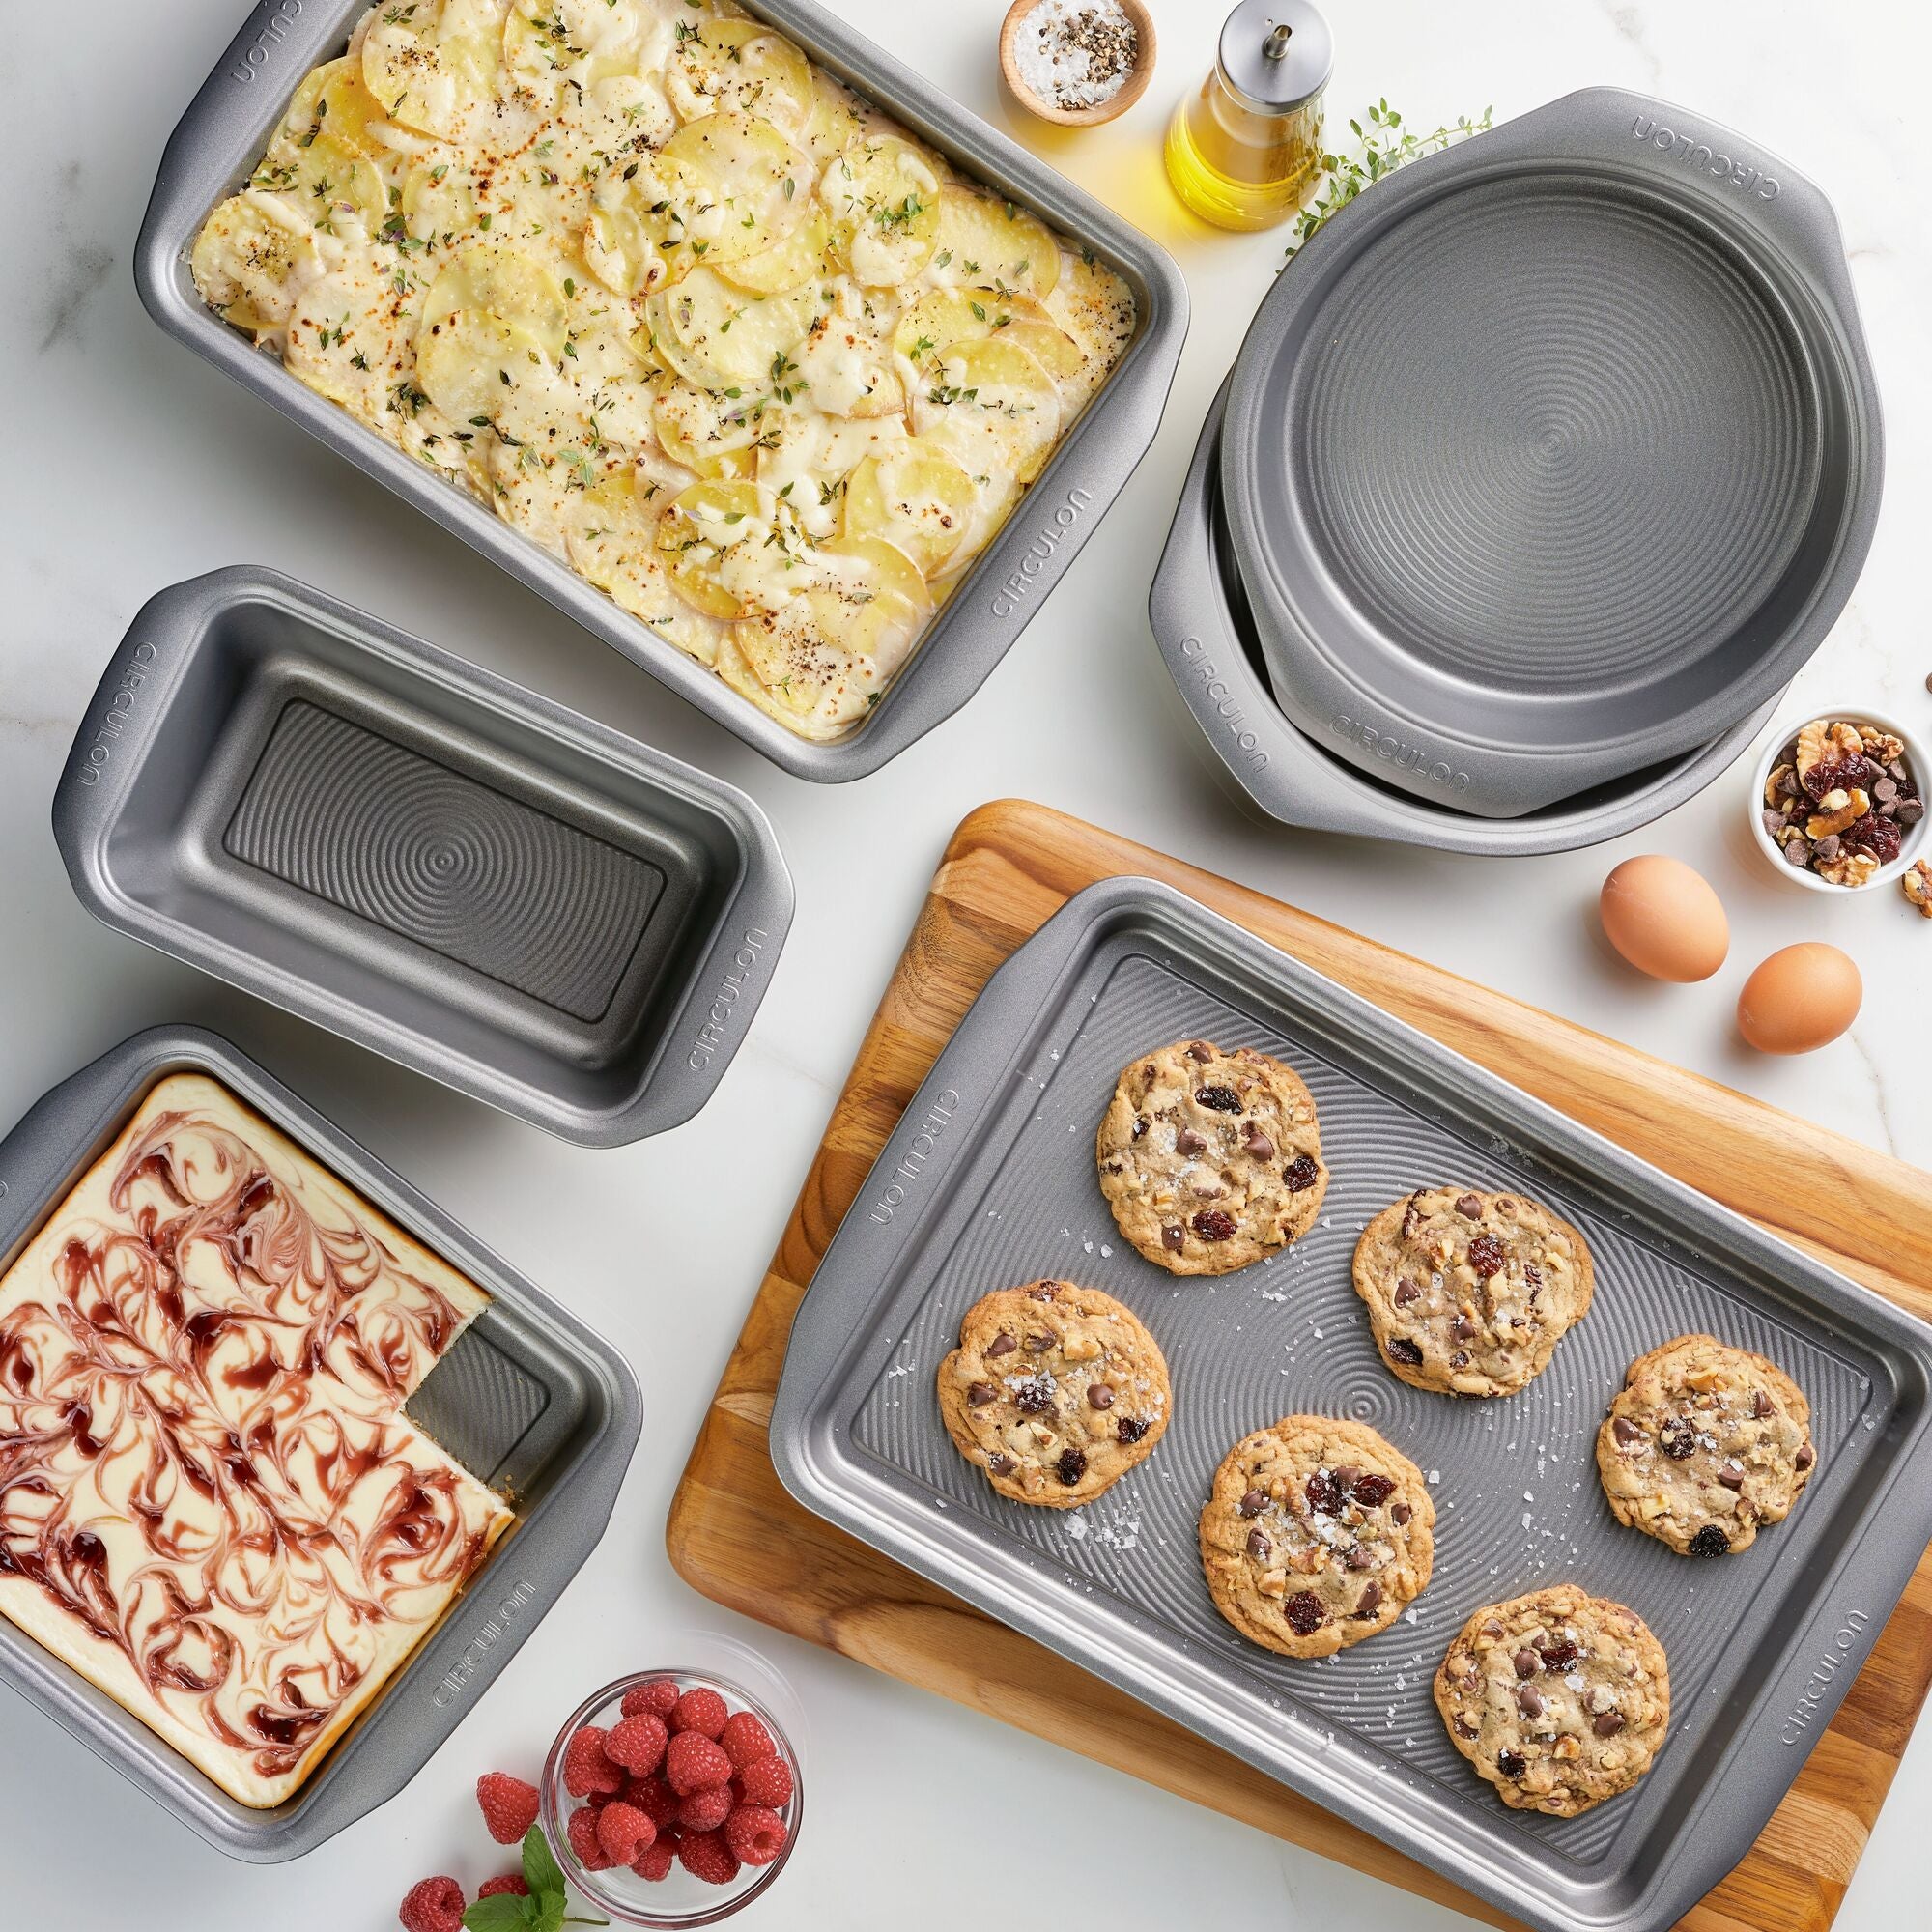 Circulon Total Nonstick Bakeware Set with Nonstick Cookie Sheet, Baking Pan  and Bread Pan - 6 Piece, Gray